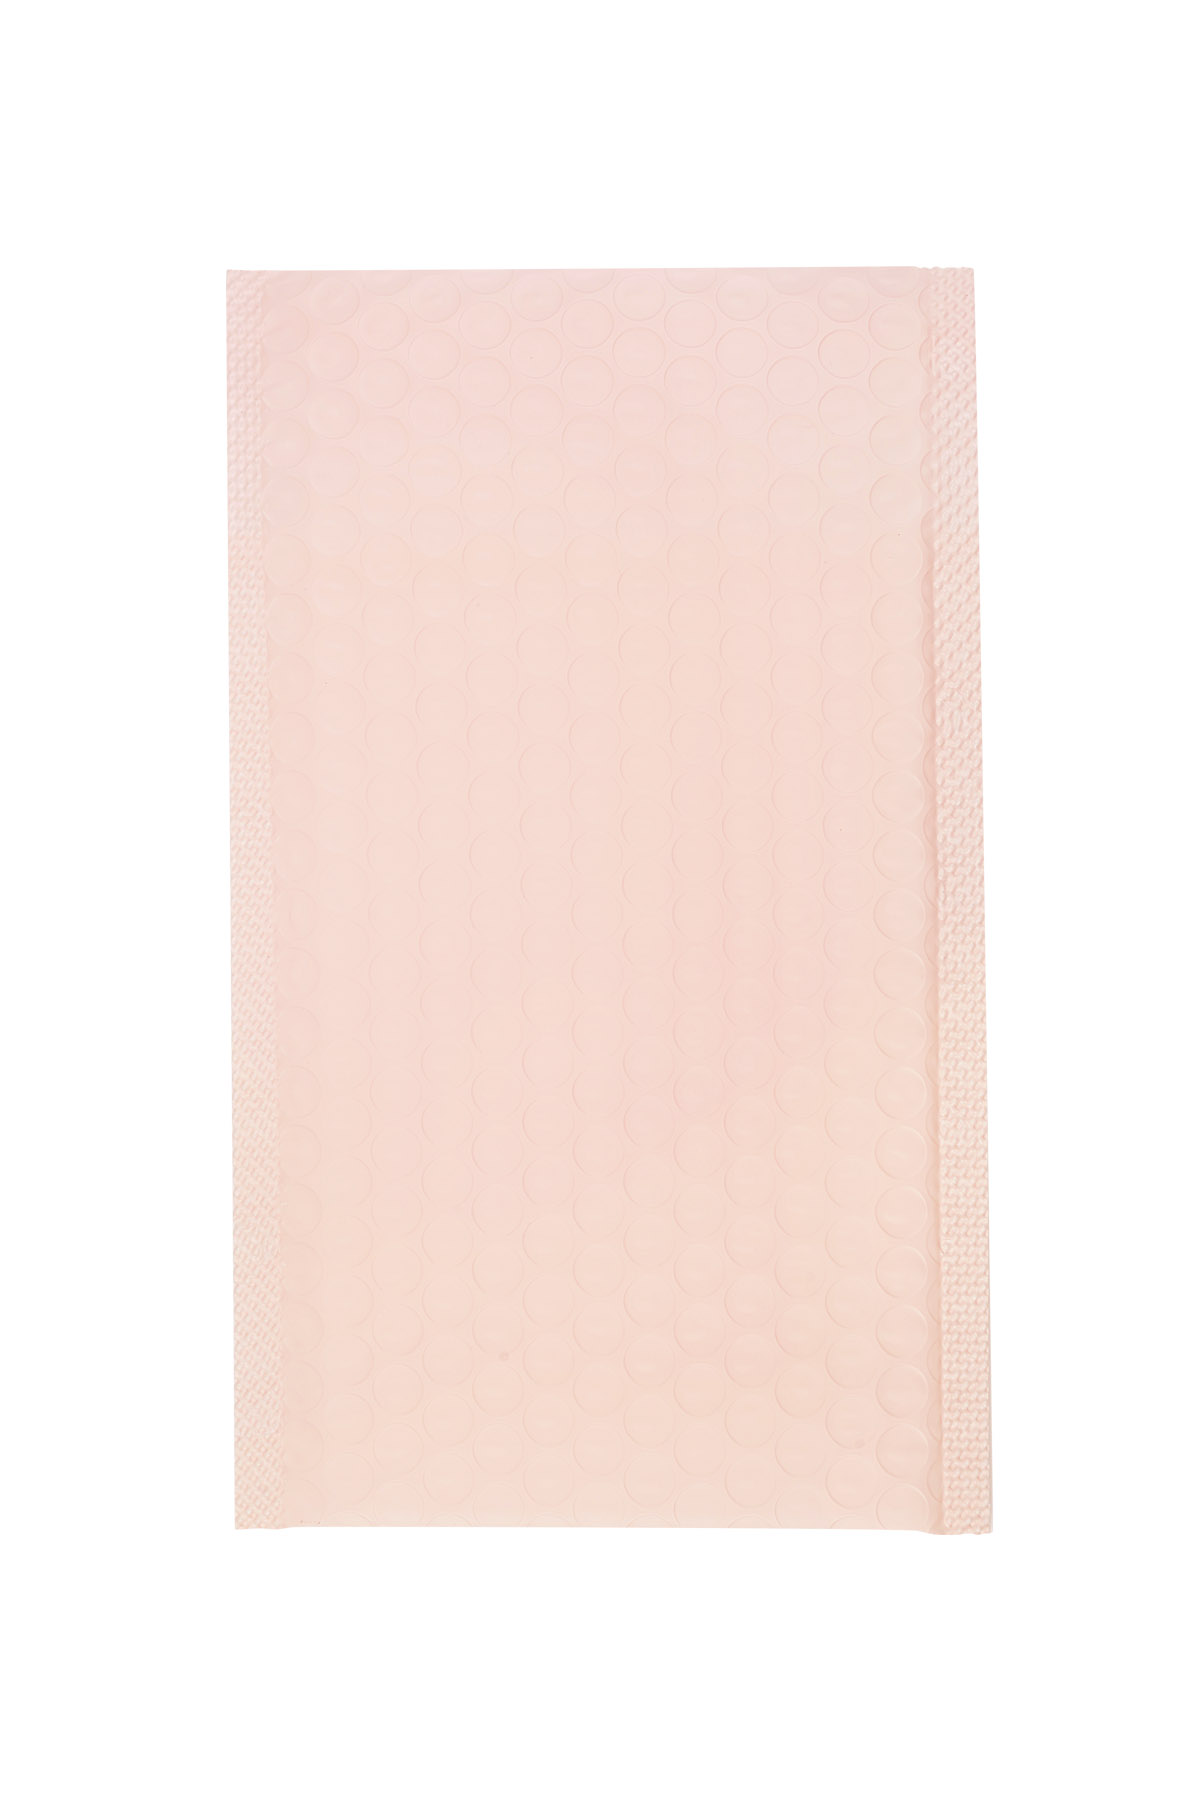 Sac postal bulle - rose pastel Plastique 